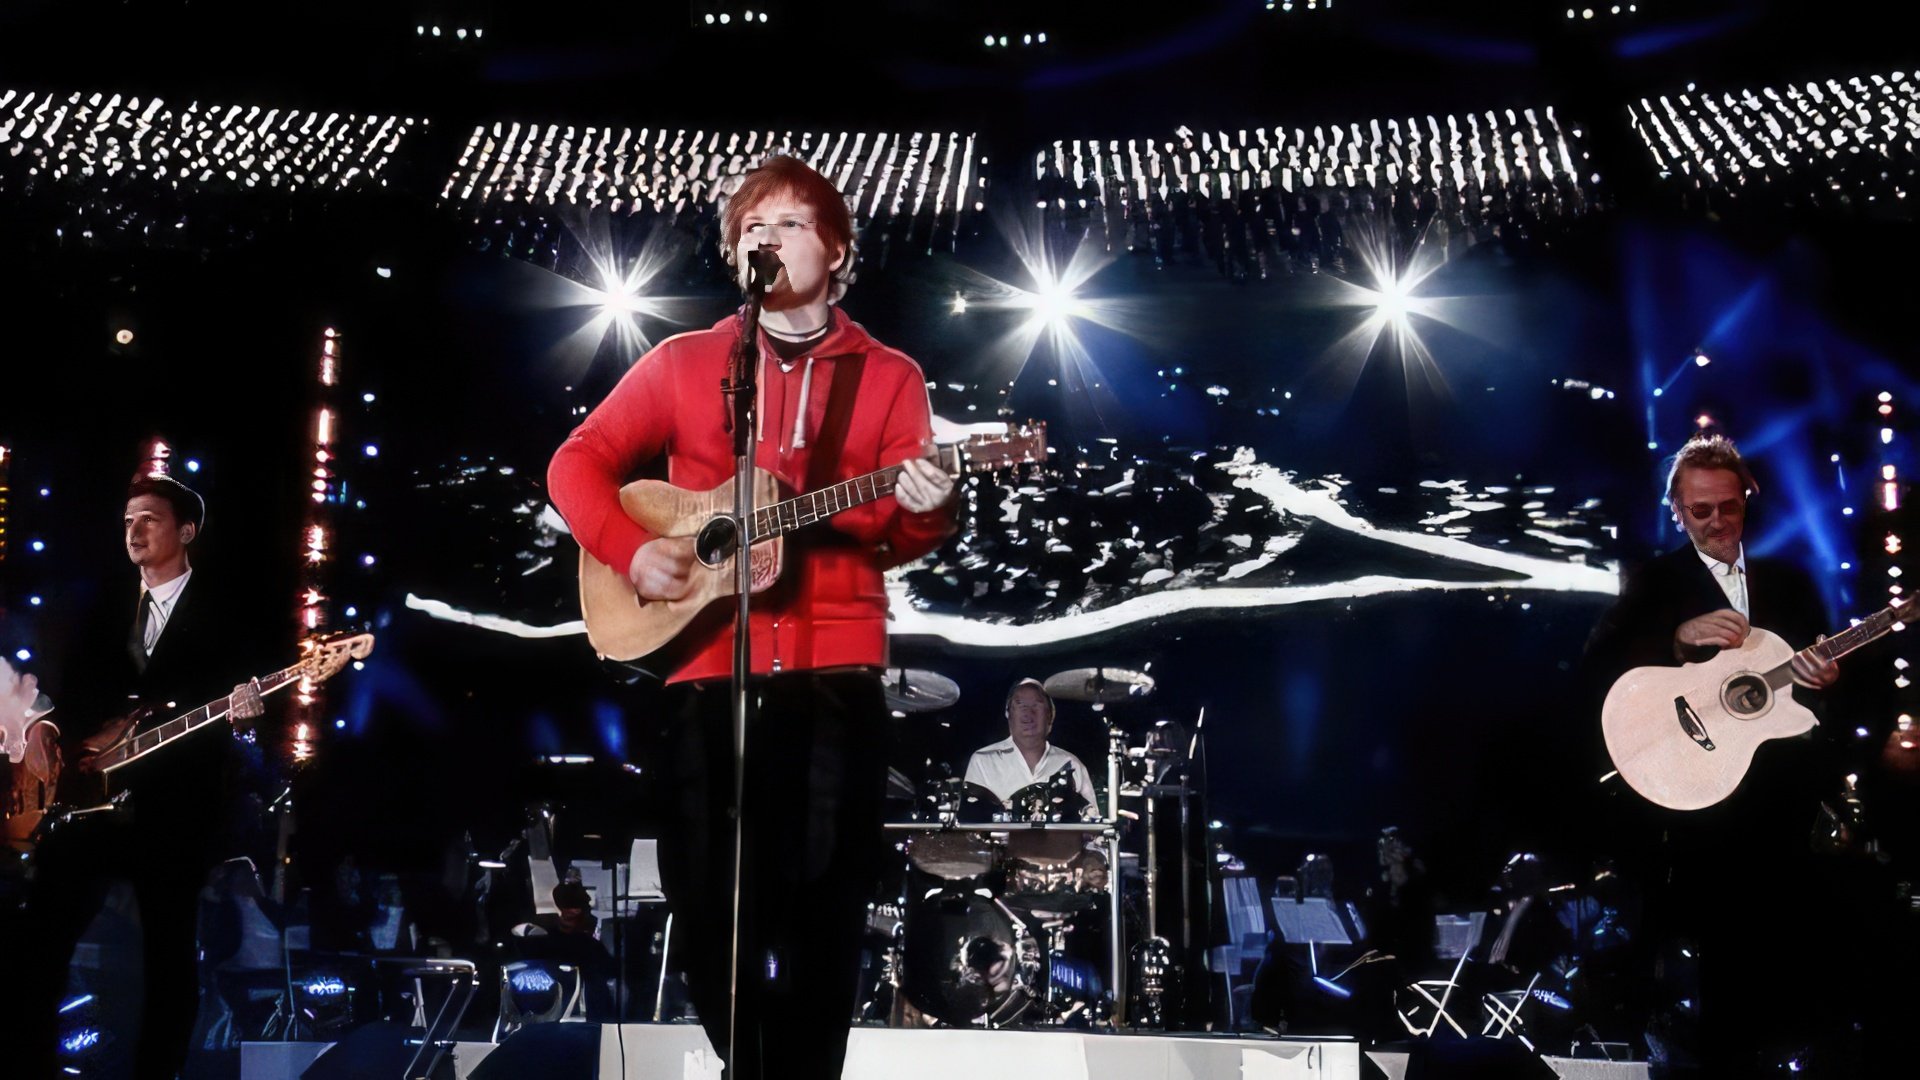 Ed Sheeran at the Closing of the 2012 Olympics in London